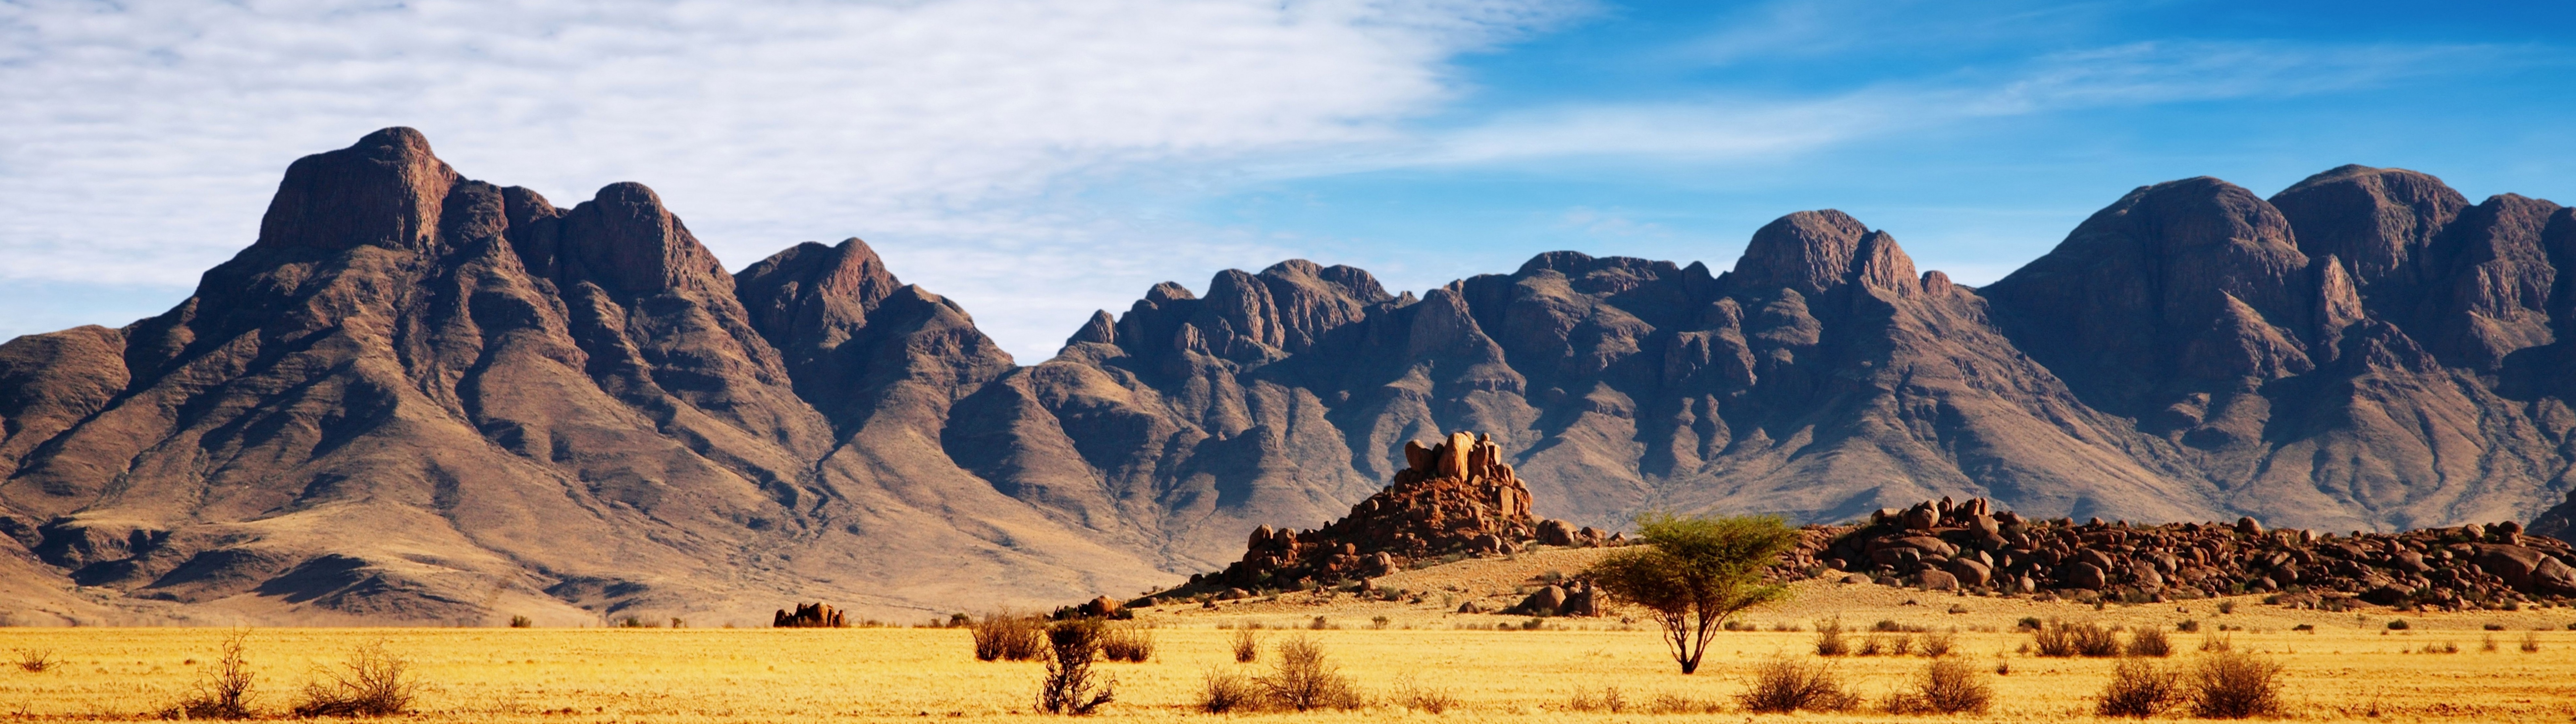 Desert Mountains Desktop Background Wallpaper